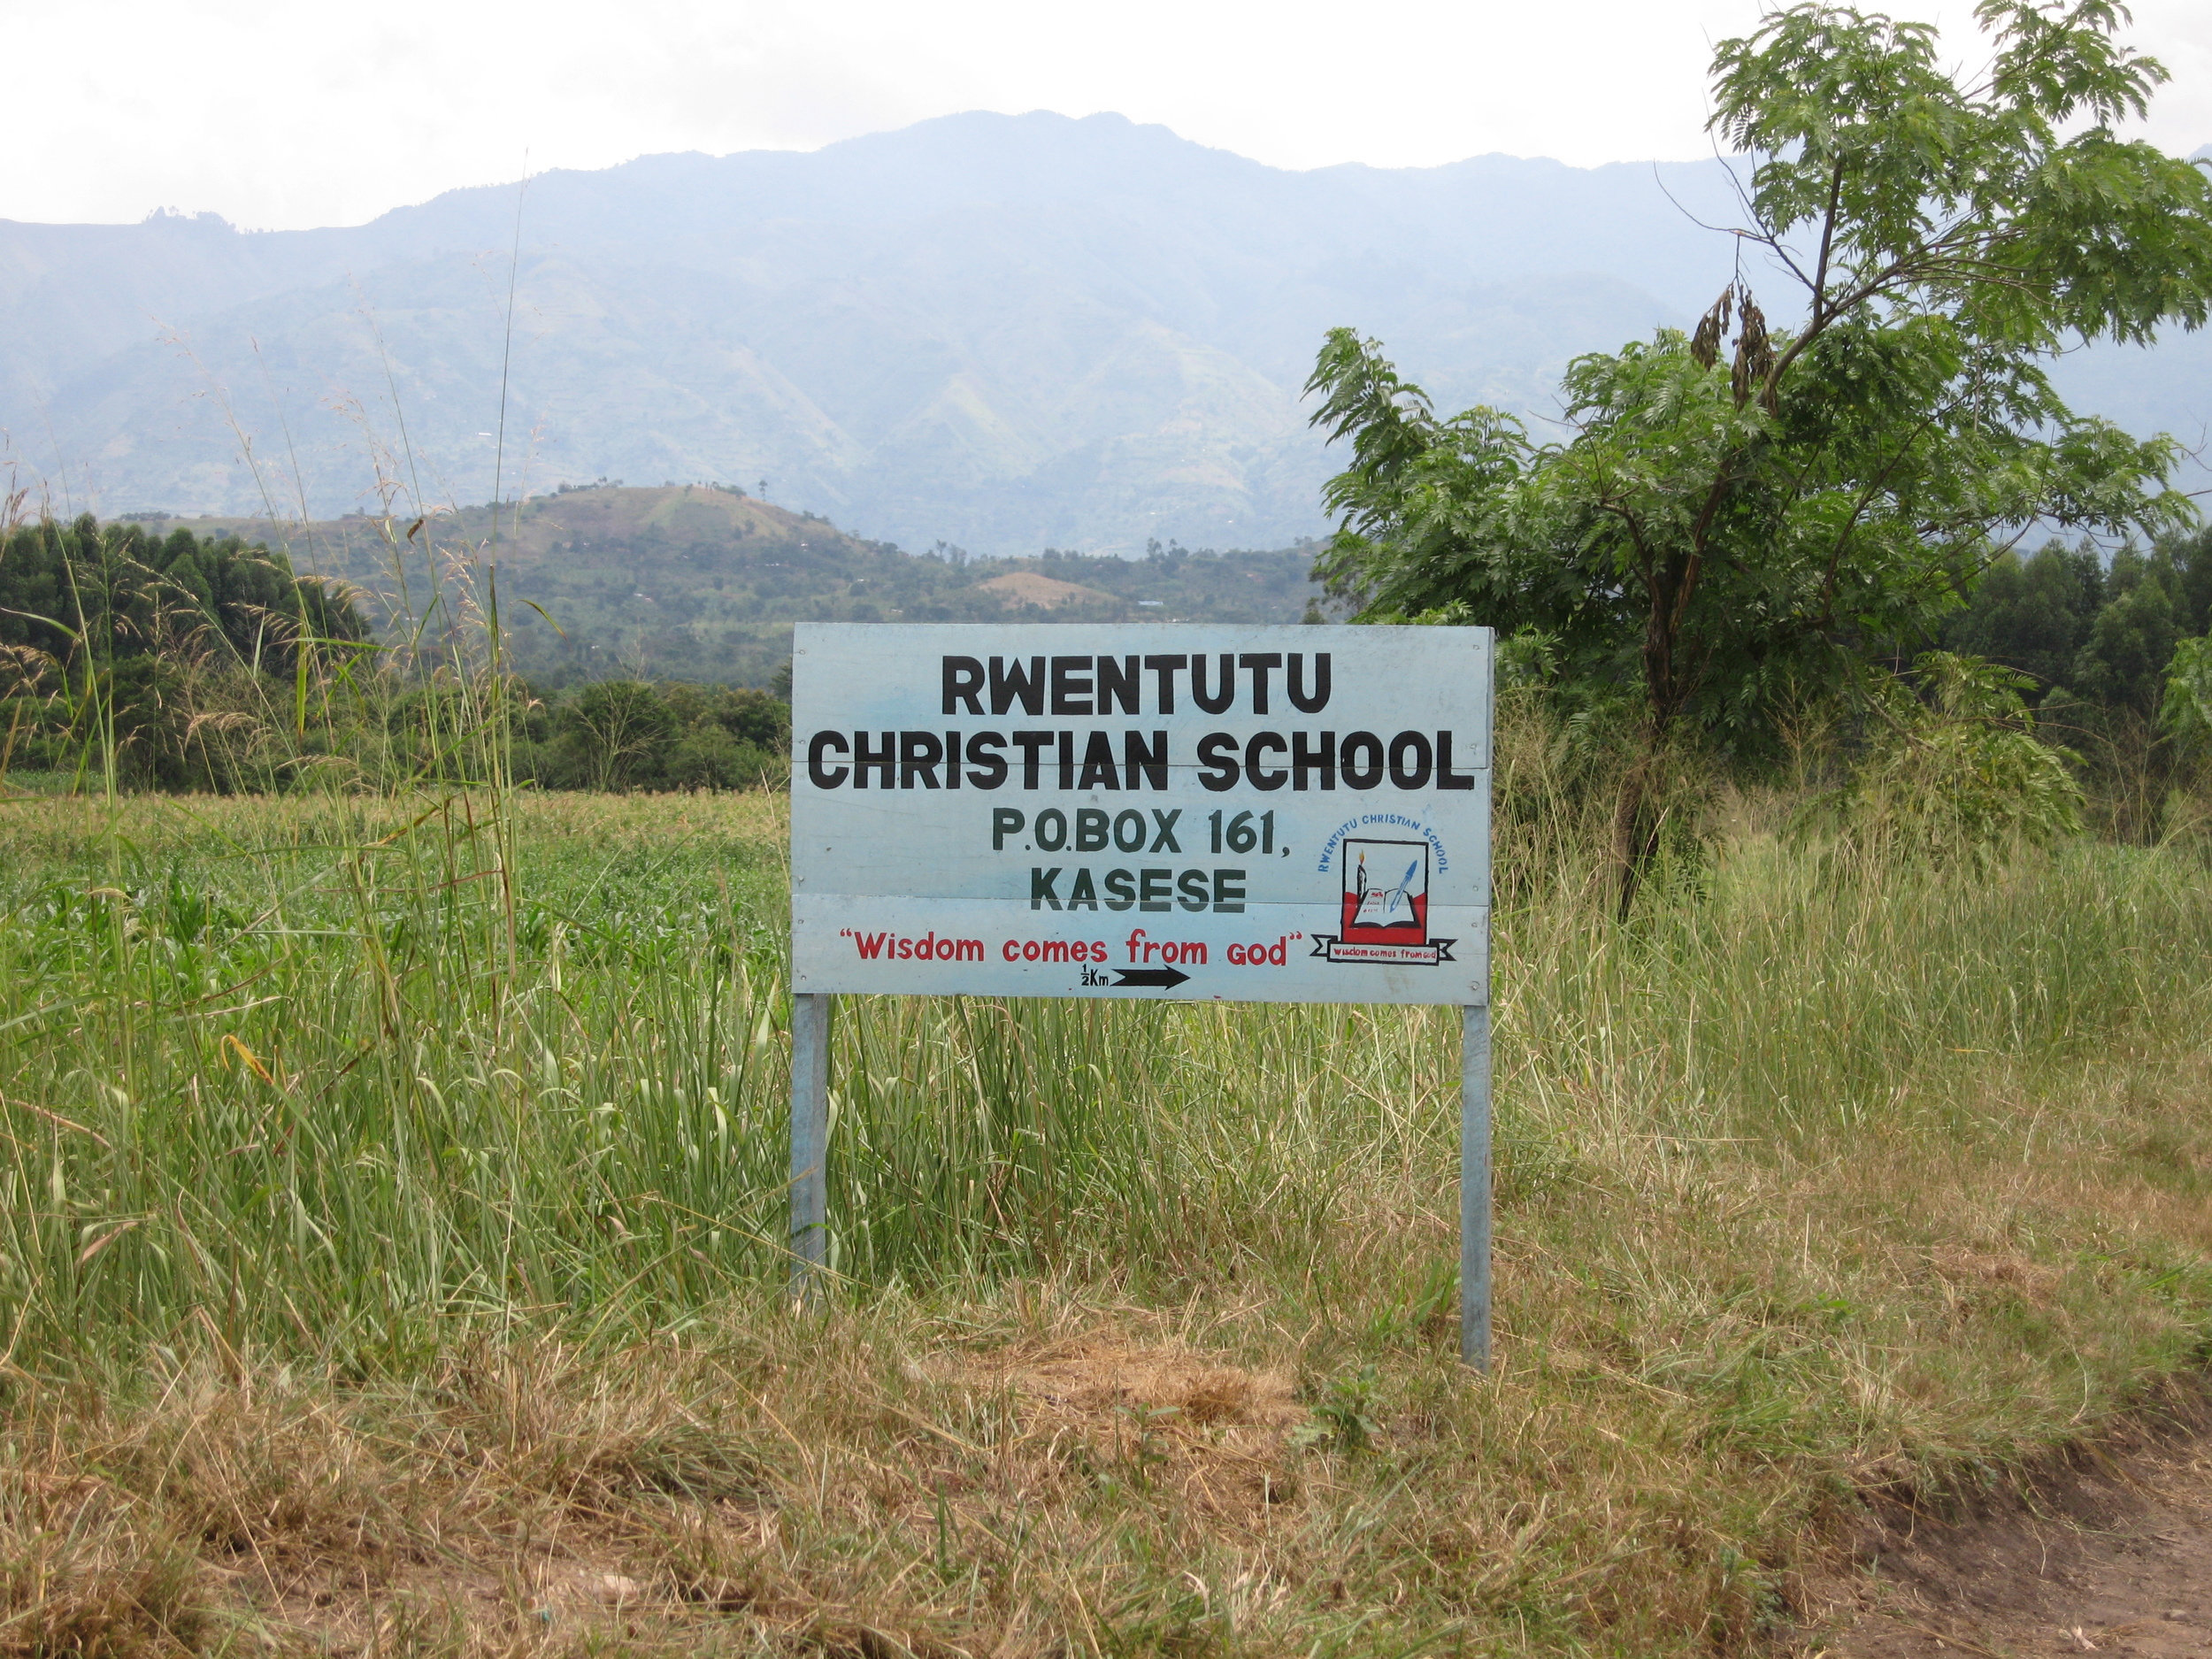 Rural school in foothills of Rwenzori Mountains